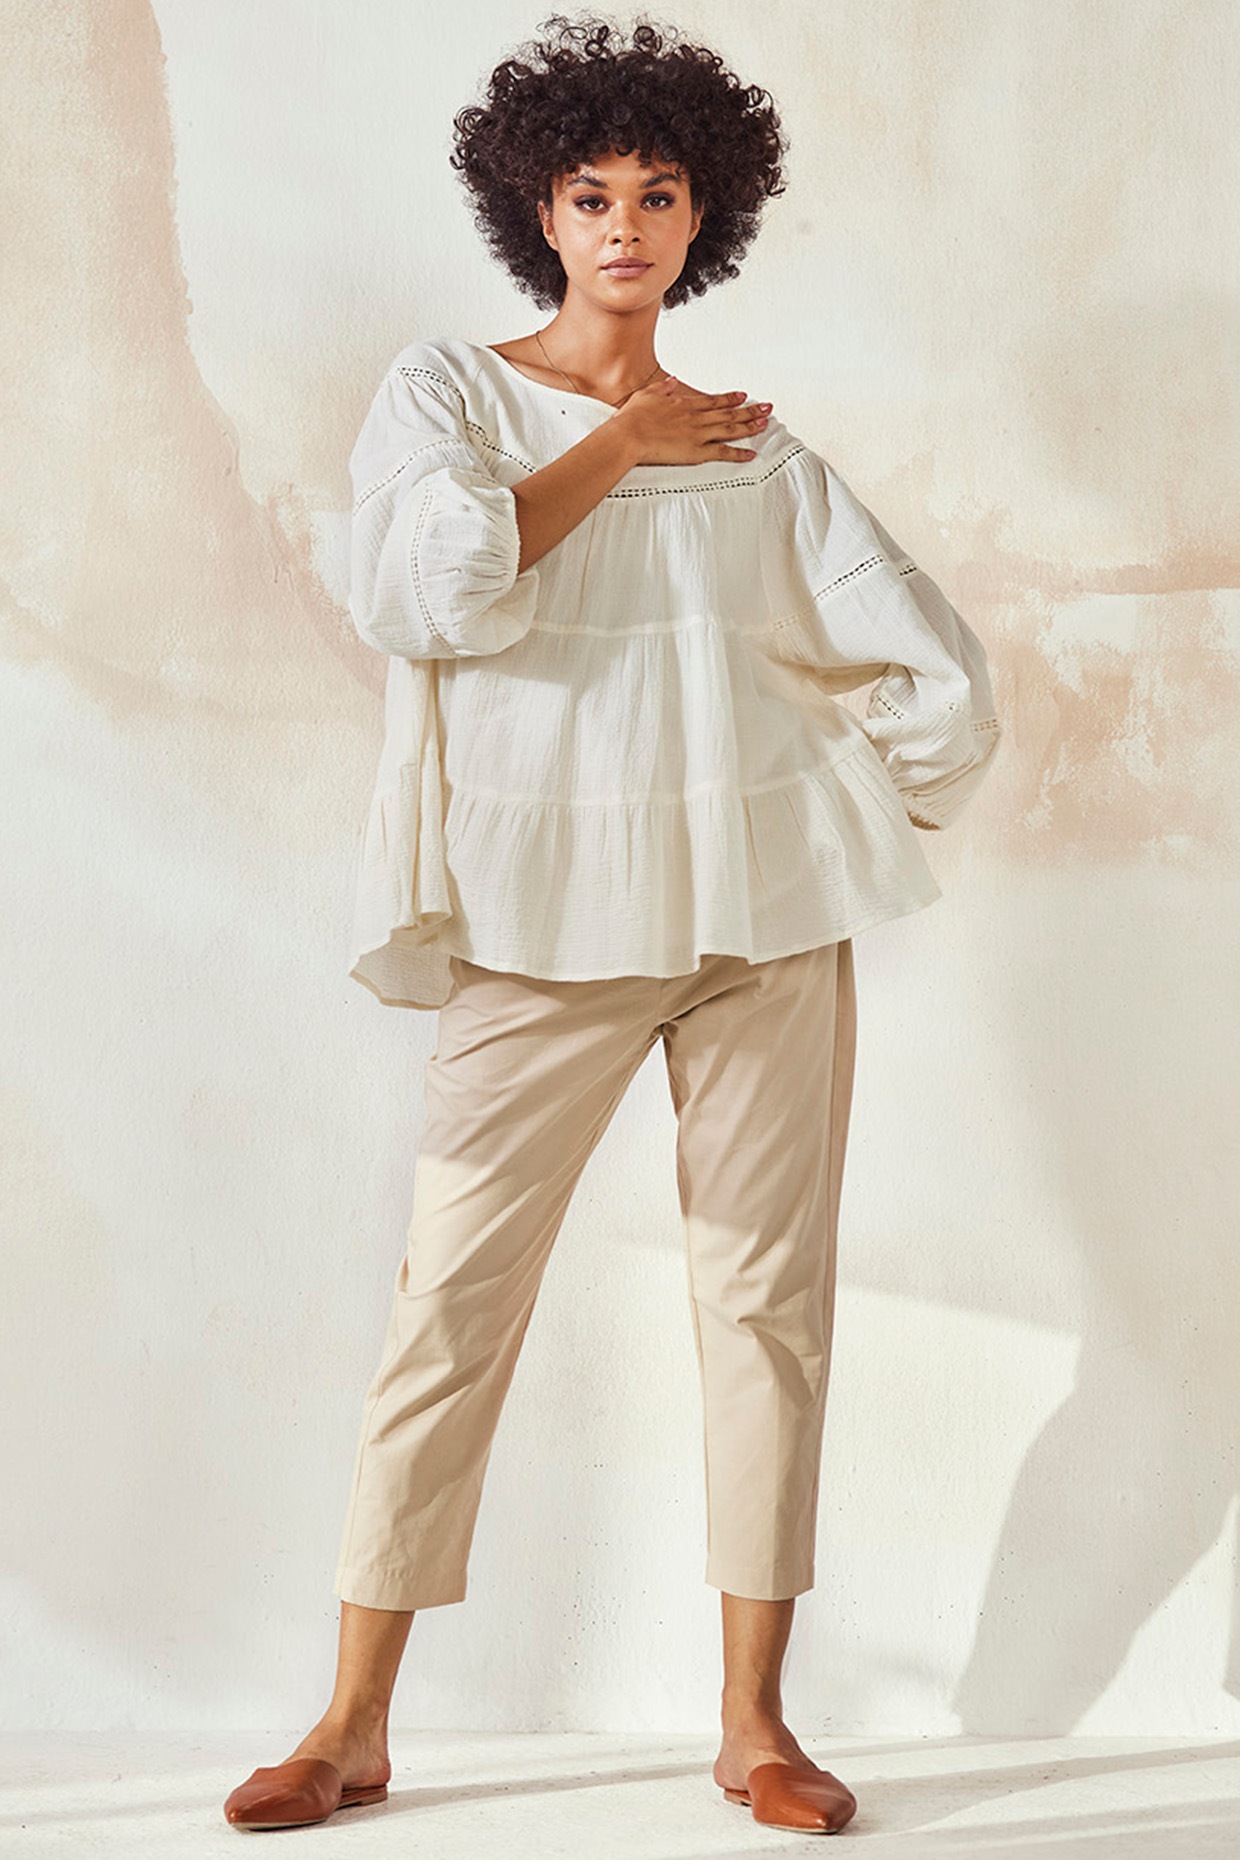 Feel - Hi Cotton Khadi Pants for Women, Khaki/Chikoo Color Size XXL :  Amazon.in: Fashion